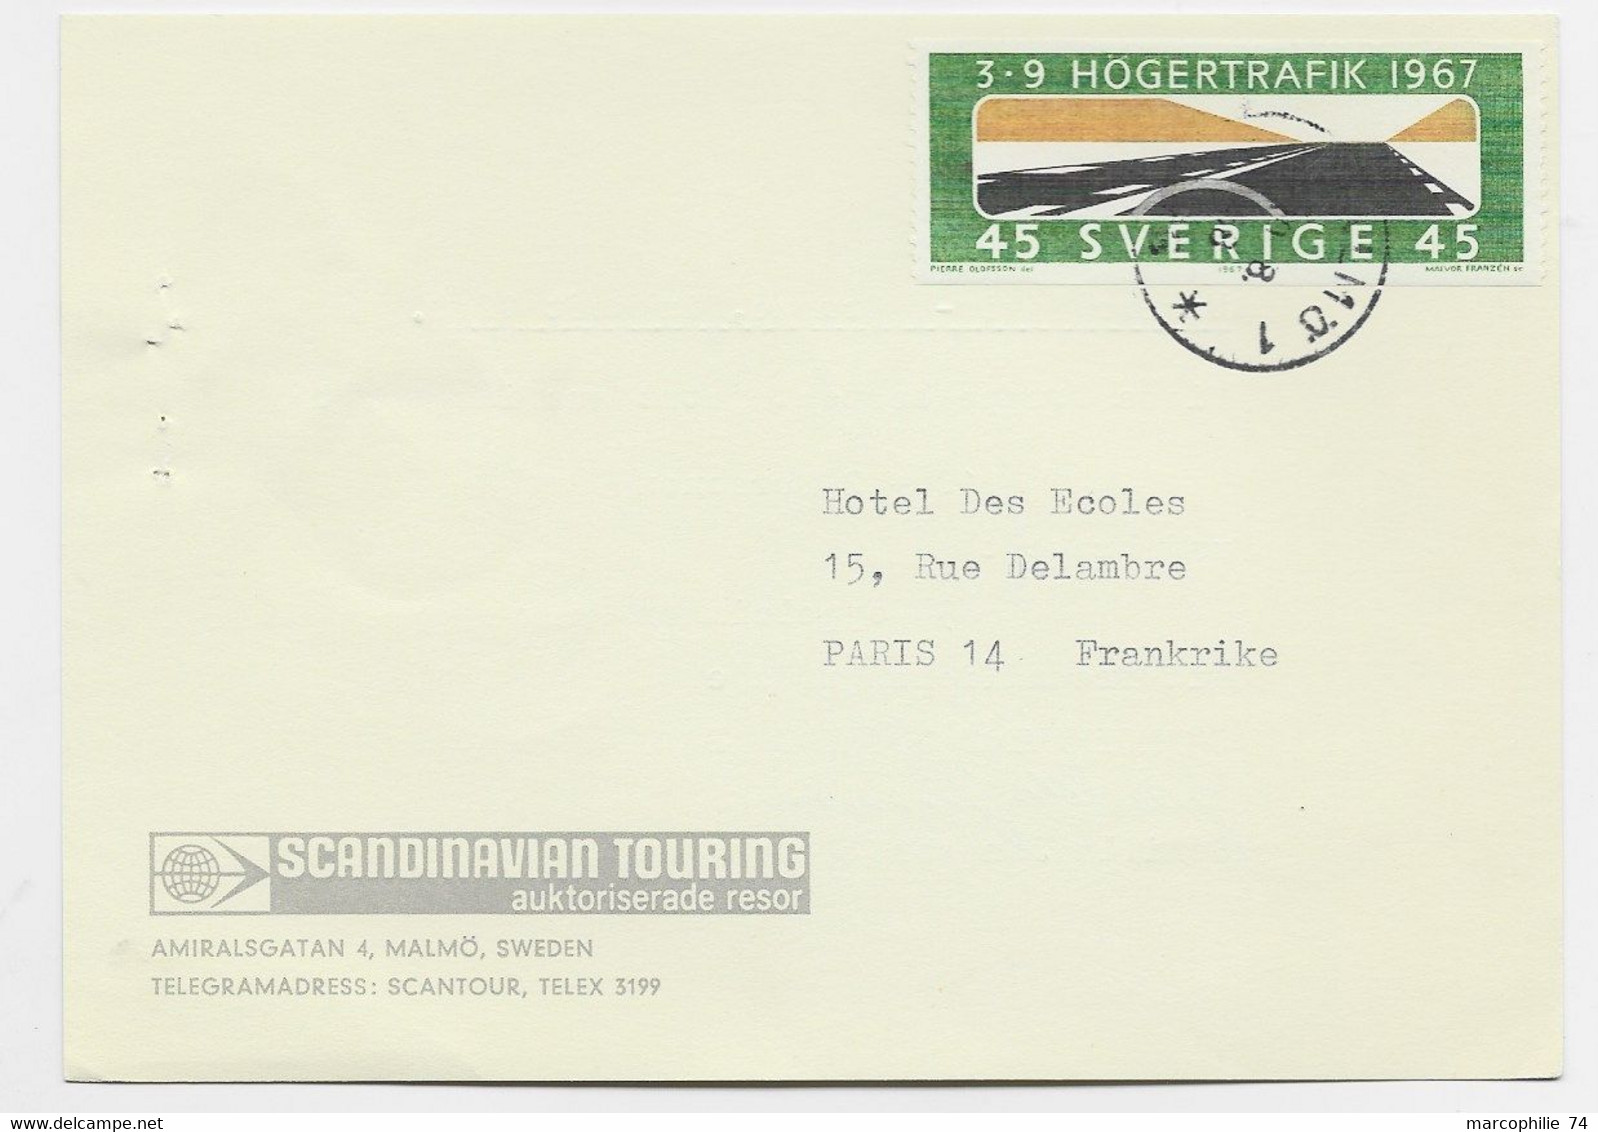 SVERIGE 45 SOLO CARD SCANDINAVIAN TOURING 1967 O FRANCE - Covers & Documents